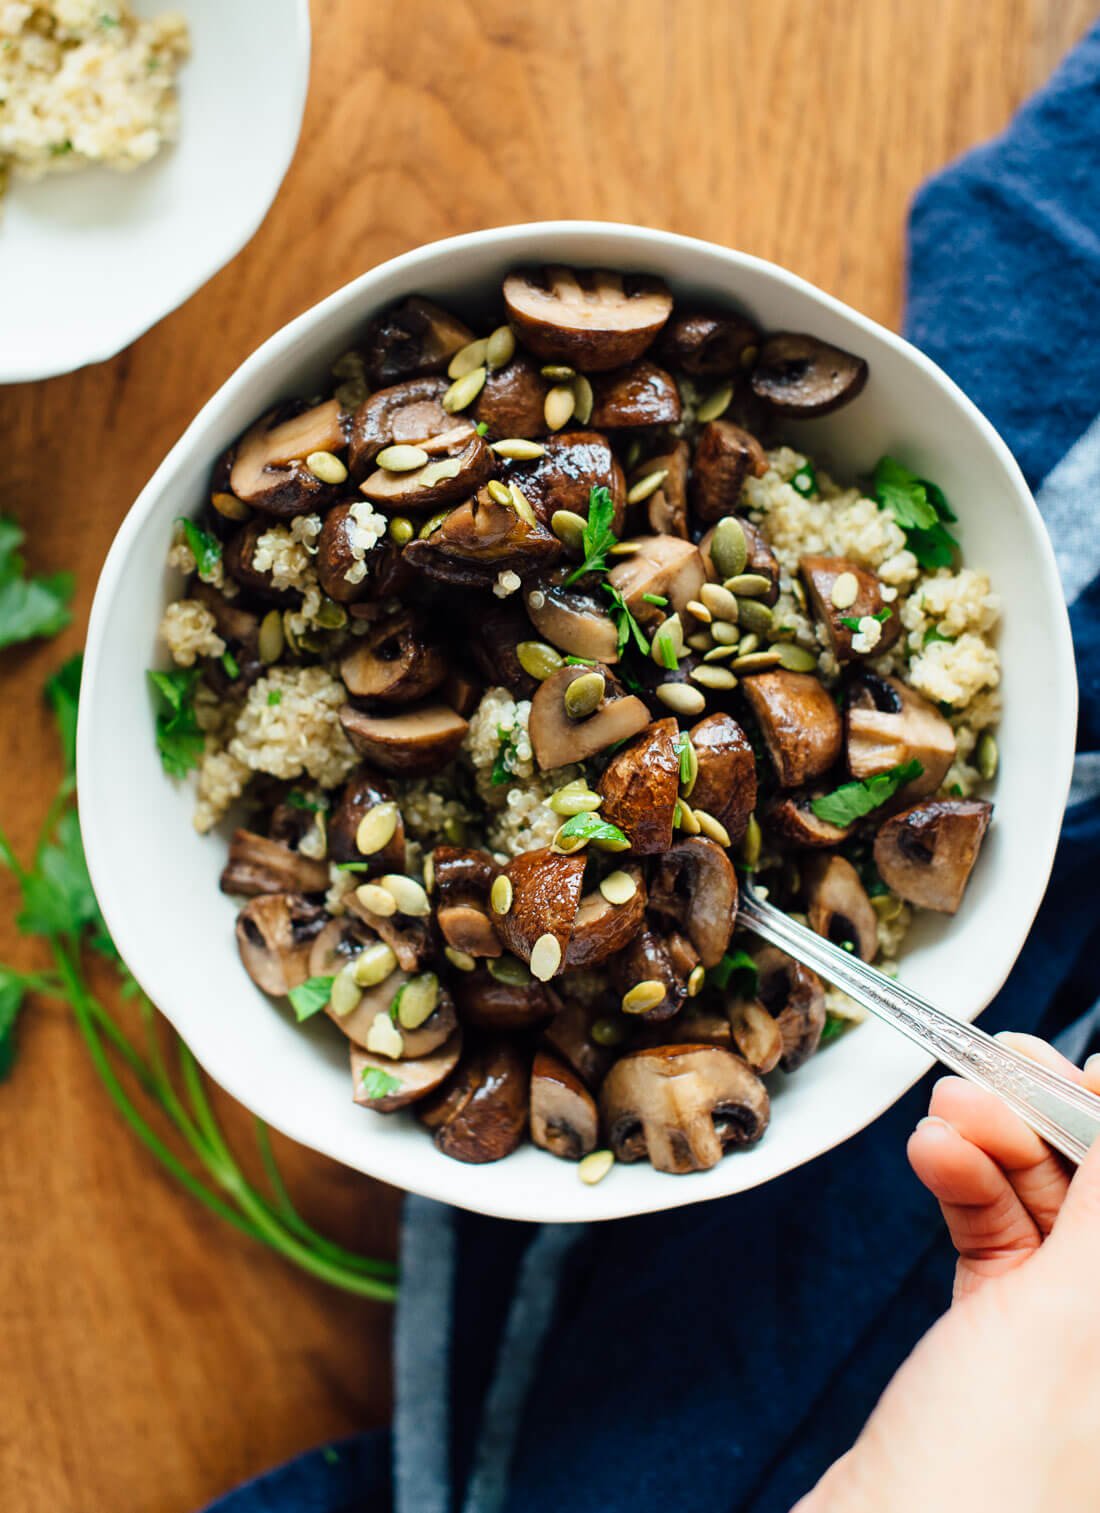 Healthy Side Dish or Light Dinner Recipe - Sautéed Mushrooms in Herbed Quinoa!